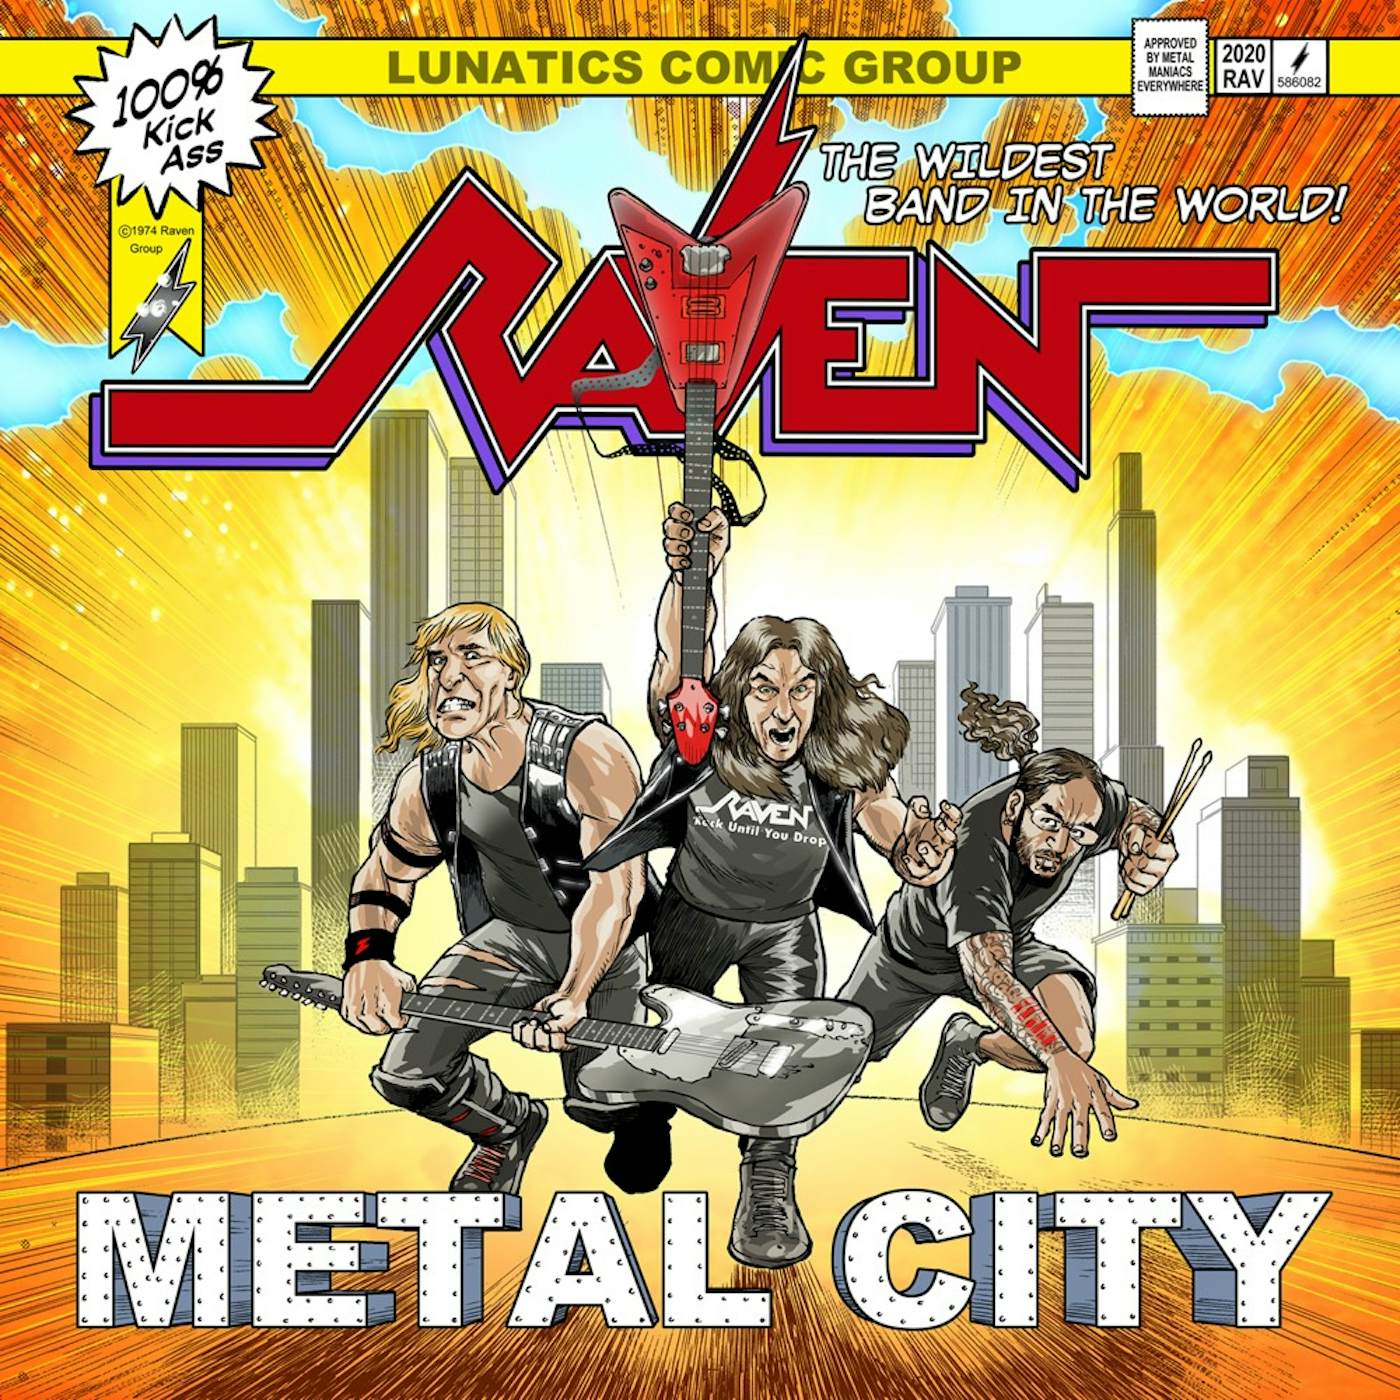 Raven METAL CITY CD